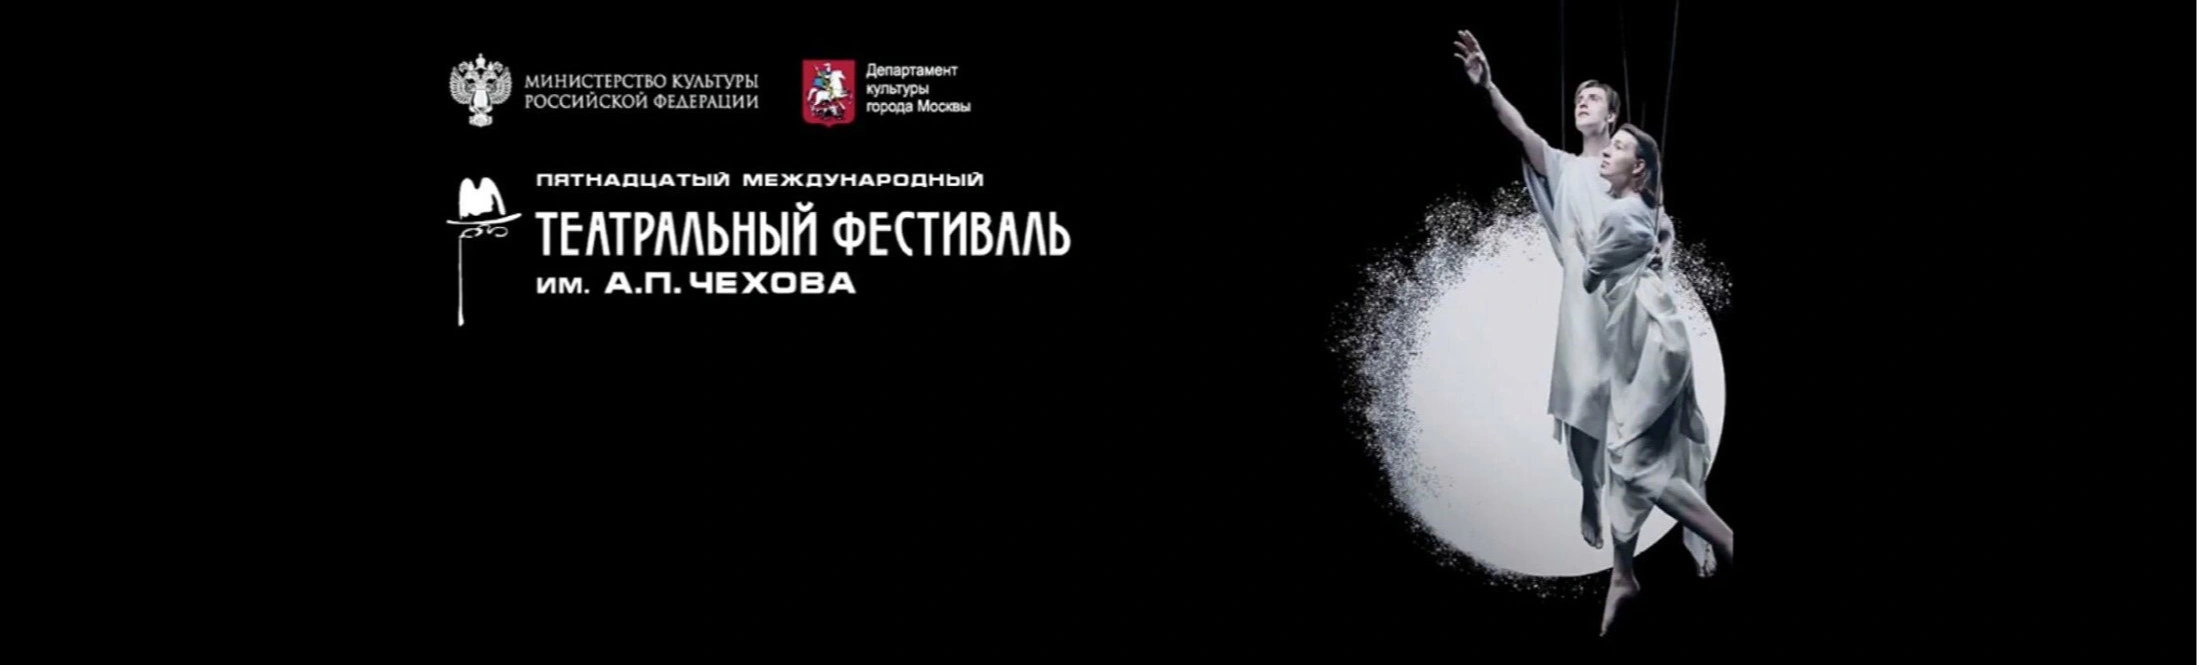 Объявлена программа 15-го фестиваля имени Чехова